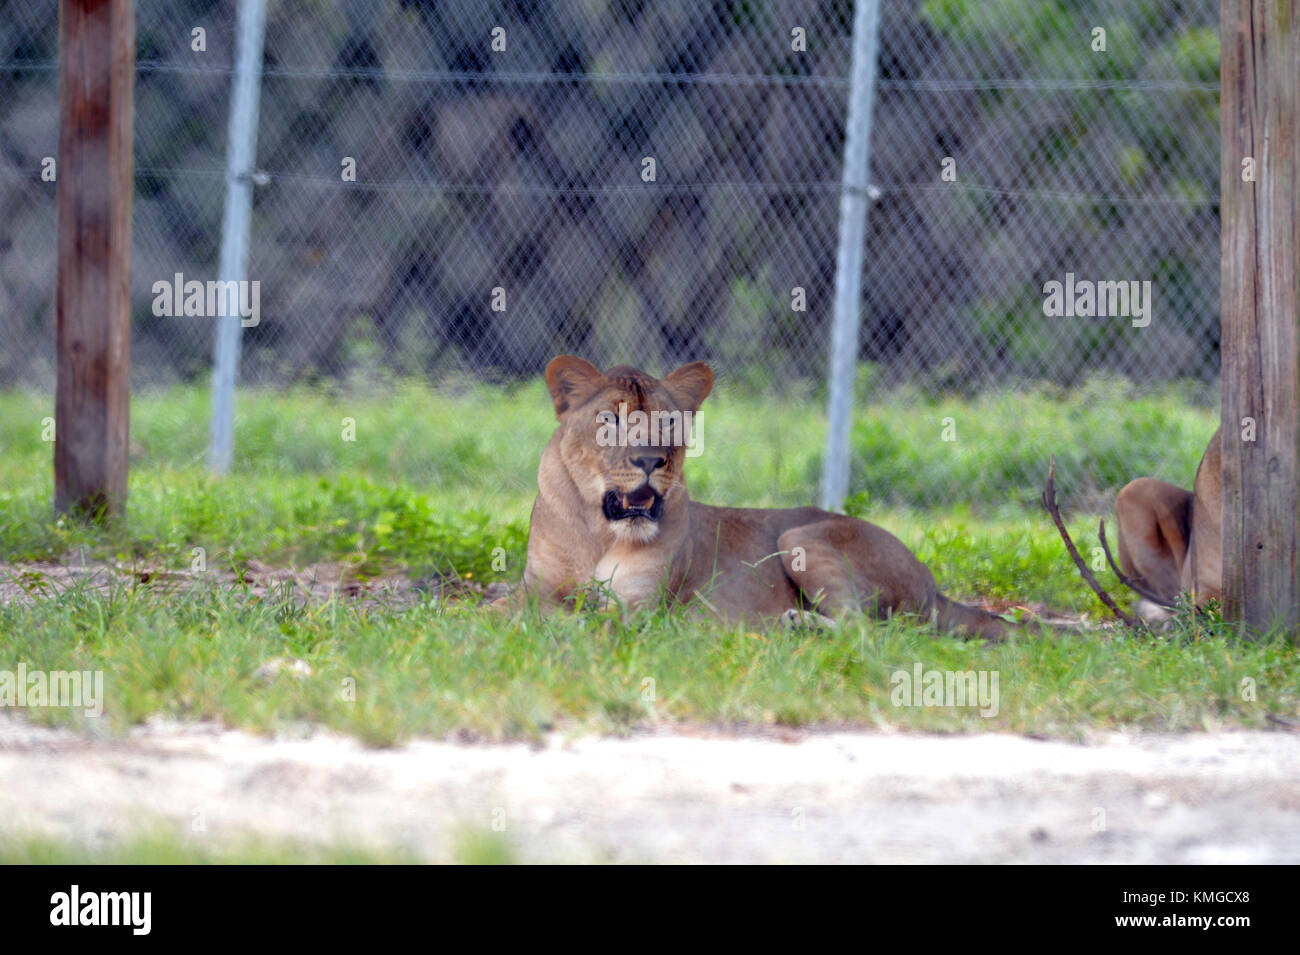 Loxahatchee, FL - 17. AUGUST: Lion at Lion Country Safari on August 17, 2015 in Loxahatchee, Florida. Personen: Lion Transmission Ref: FLXX Hoo-Me.com / MediaPunch Stockfoto